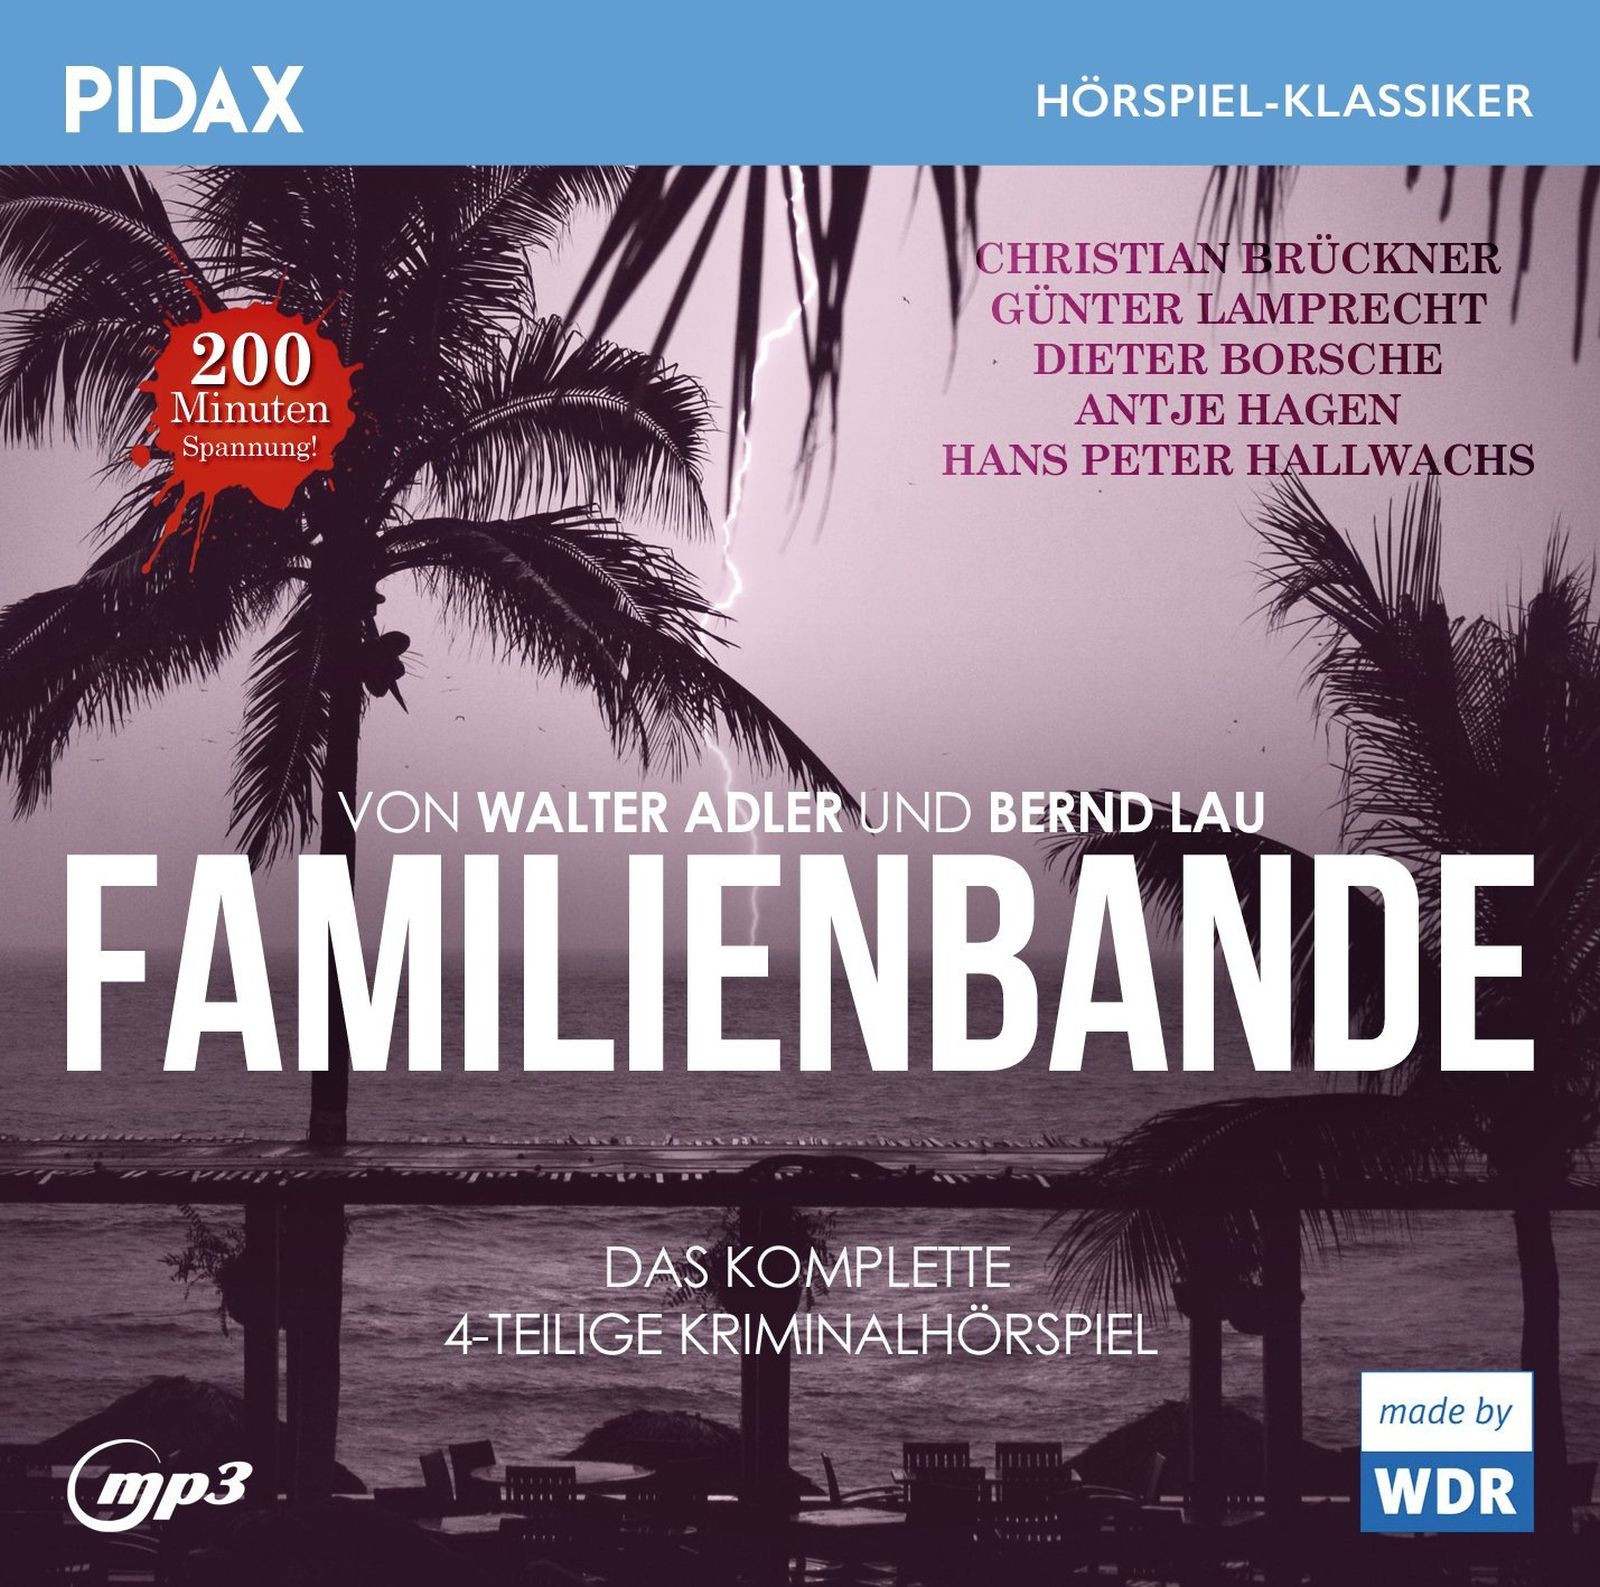 Pidax Hörspiel Klassiker - Familienbande